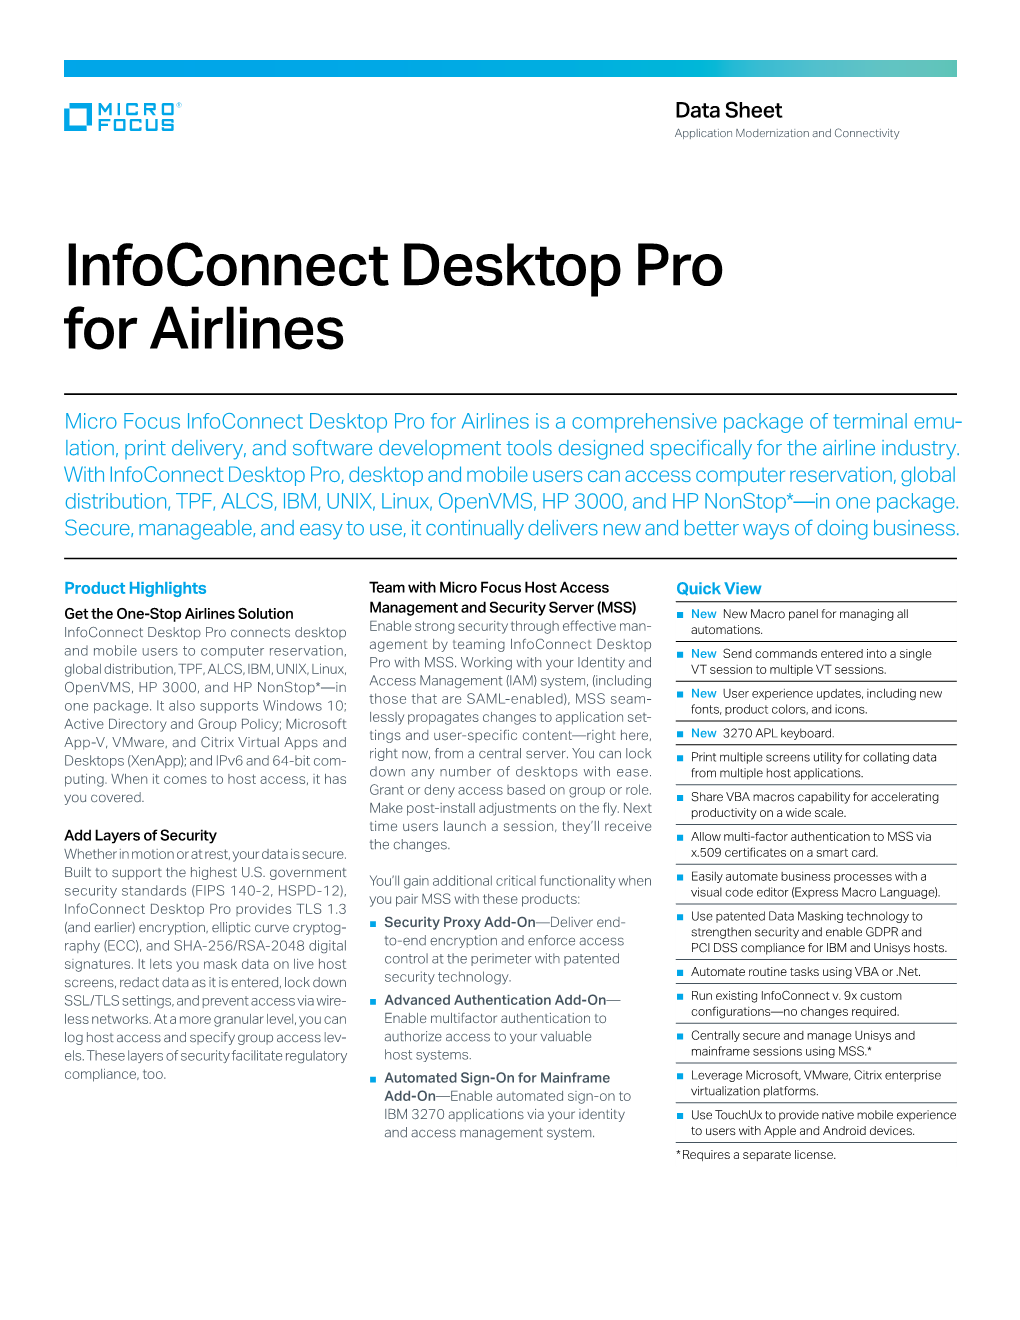 Infoconnect Desktop Pro for Airlines Data Sheet